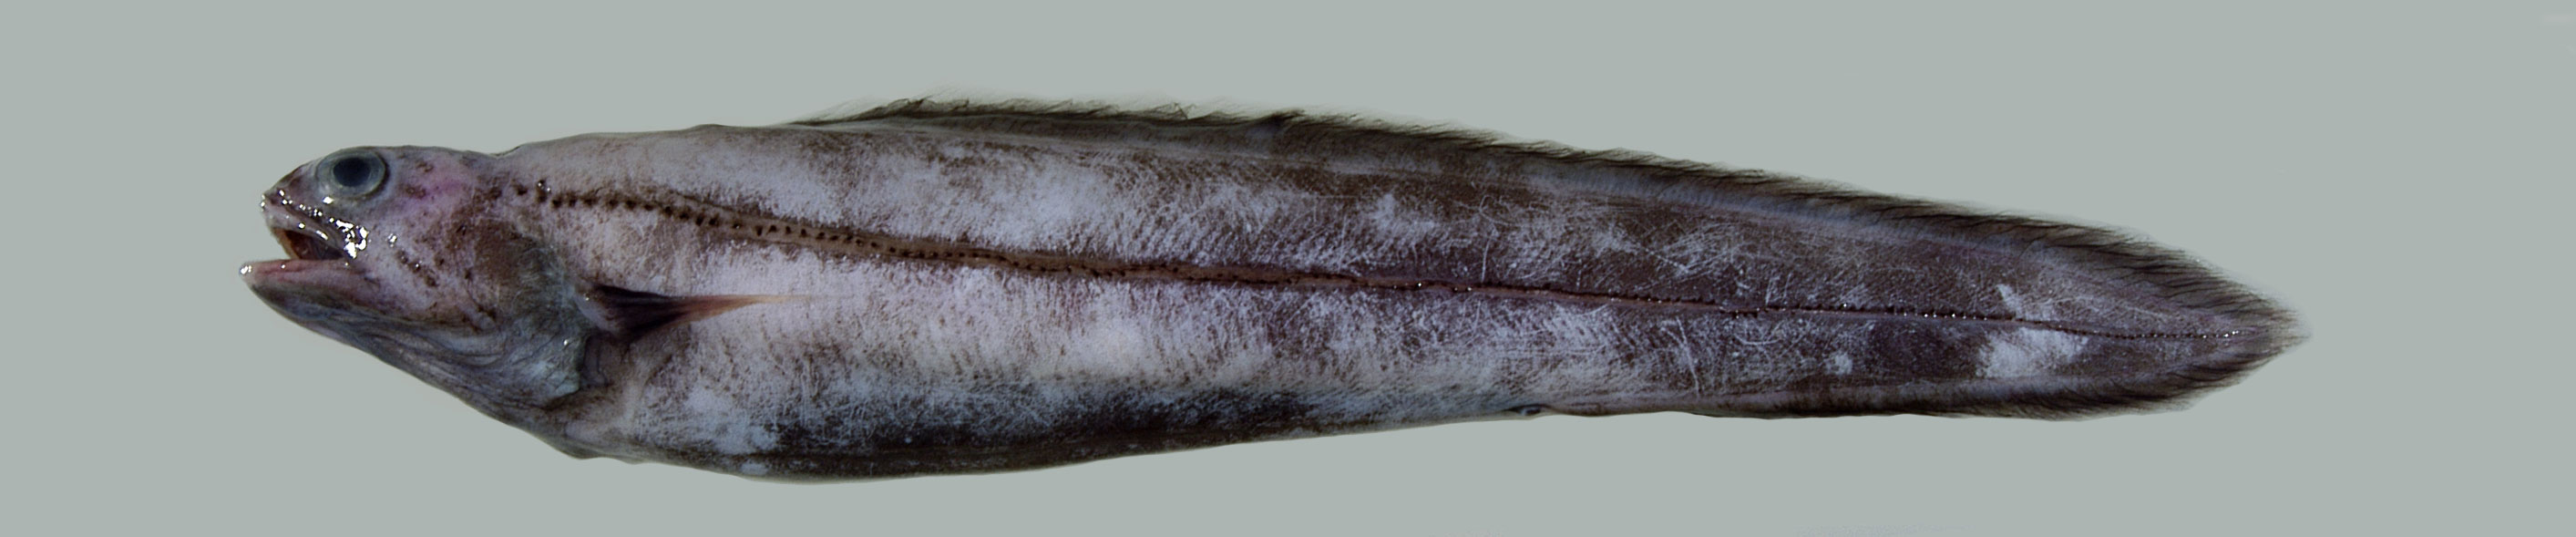 Short-tail conger eels banner